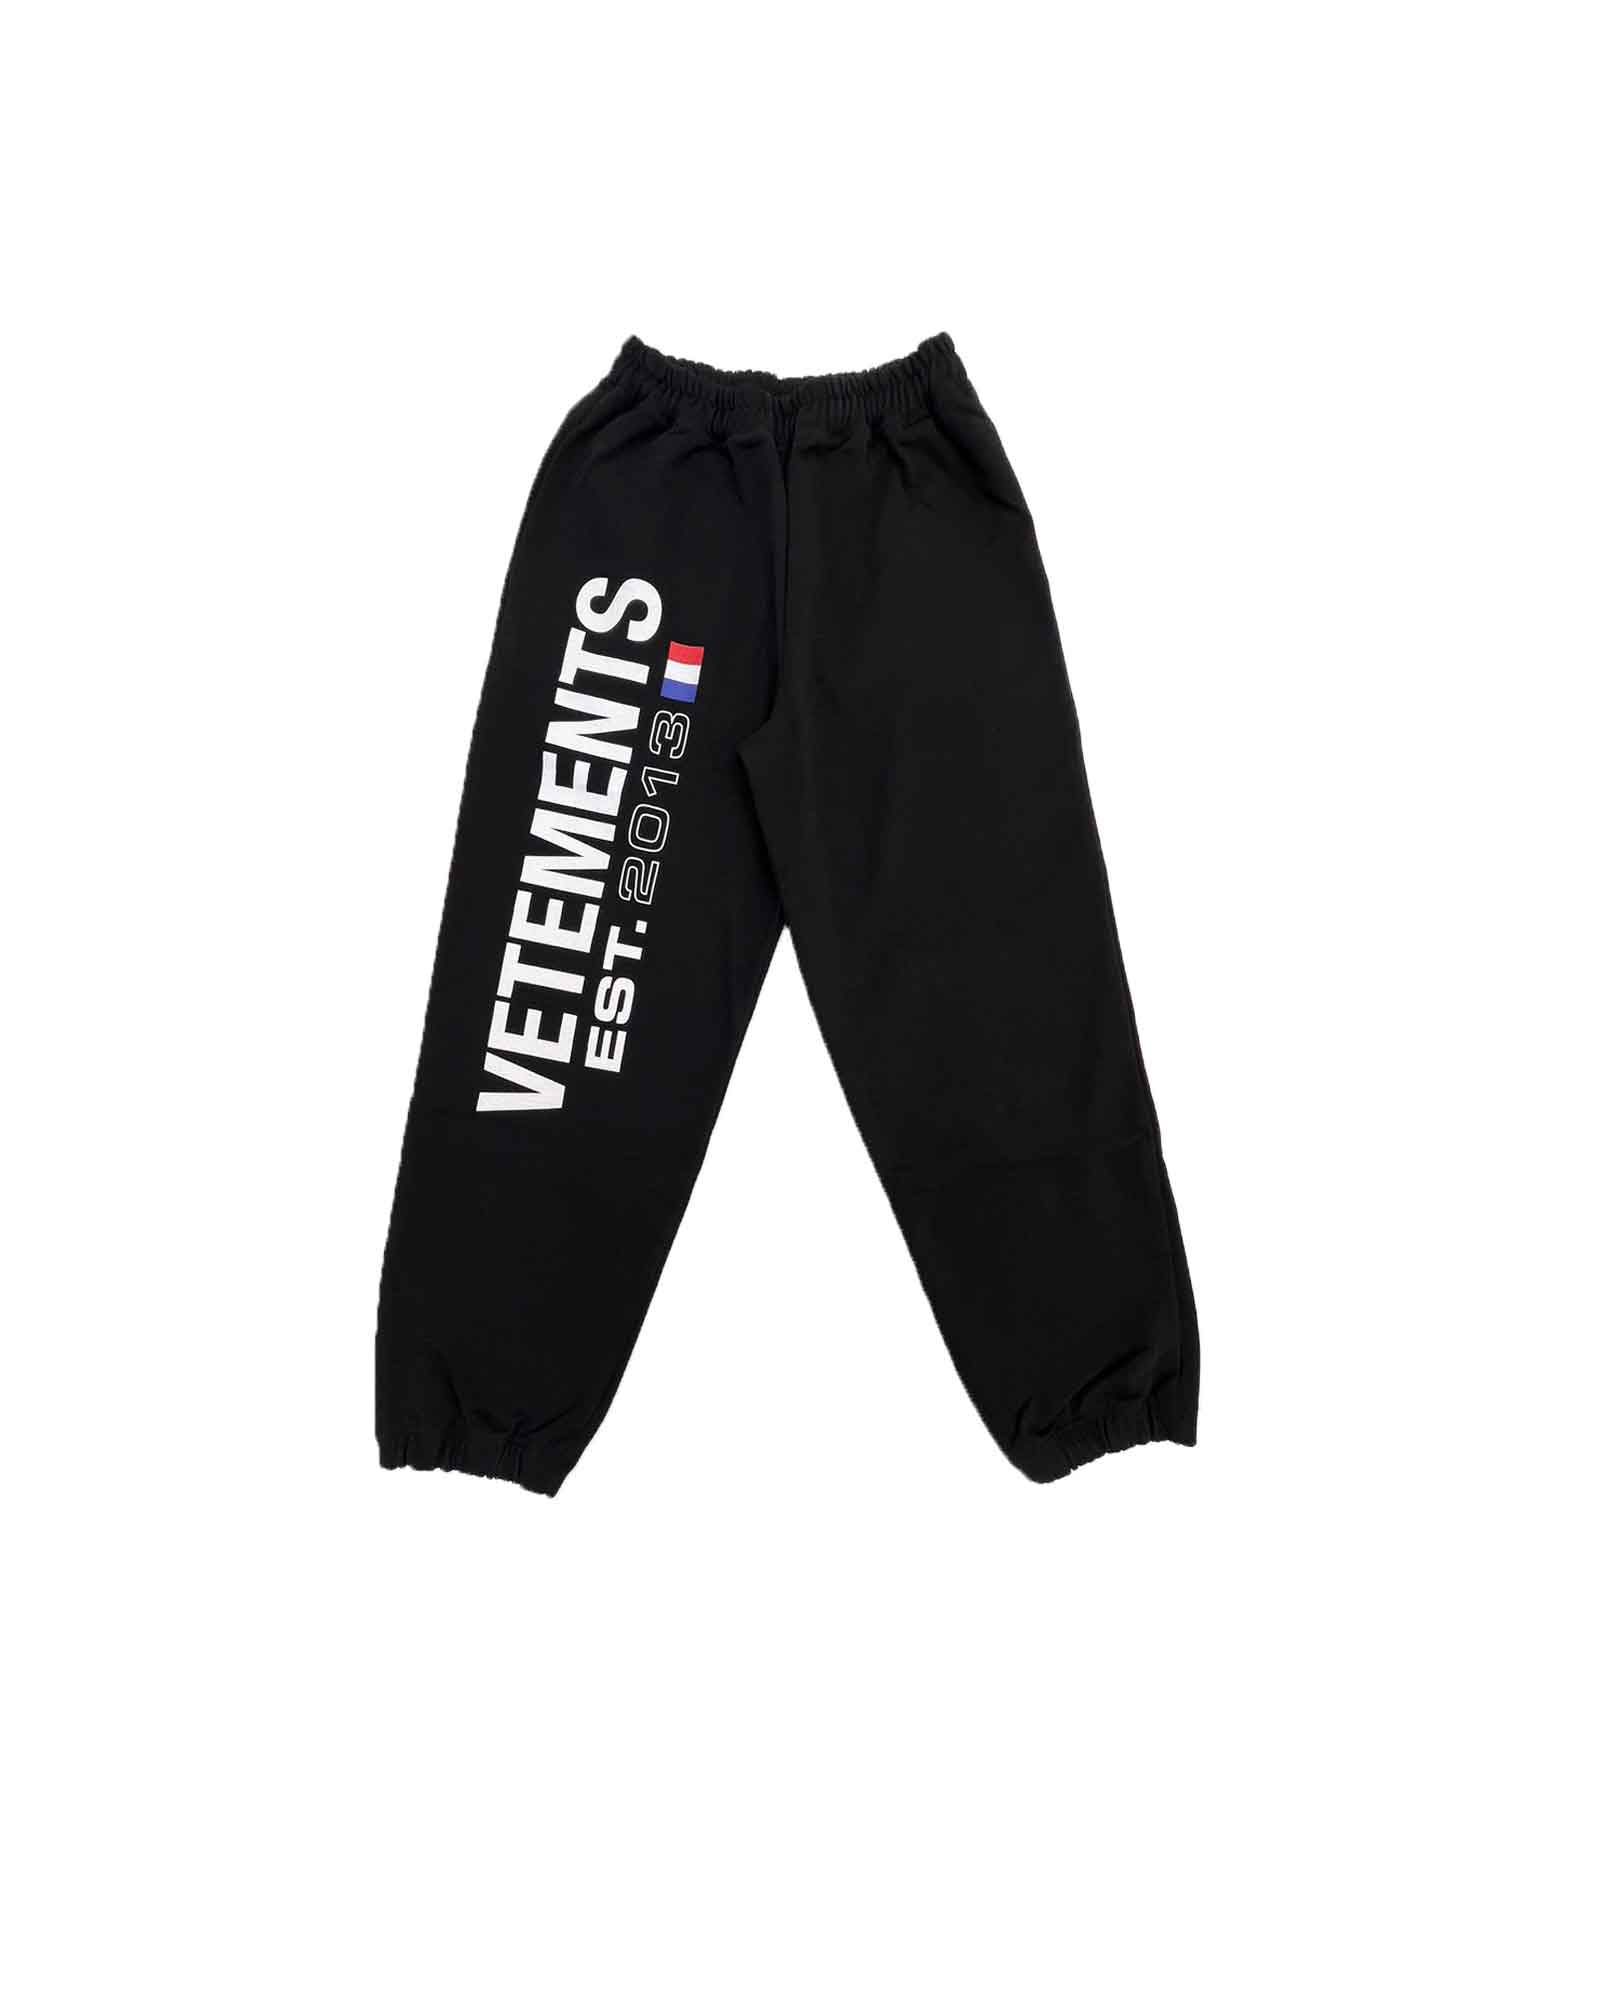 VETEMENTS - ヴェトモン/Flag logo sweatpants/スウェットパンツ/Black